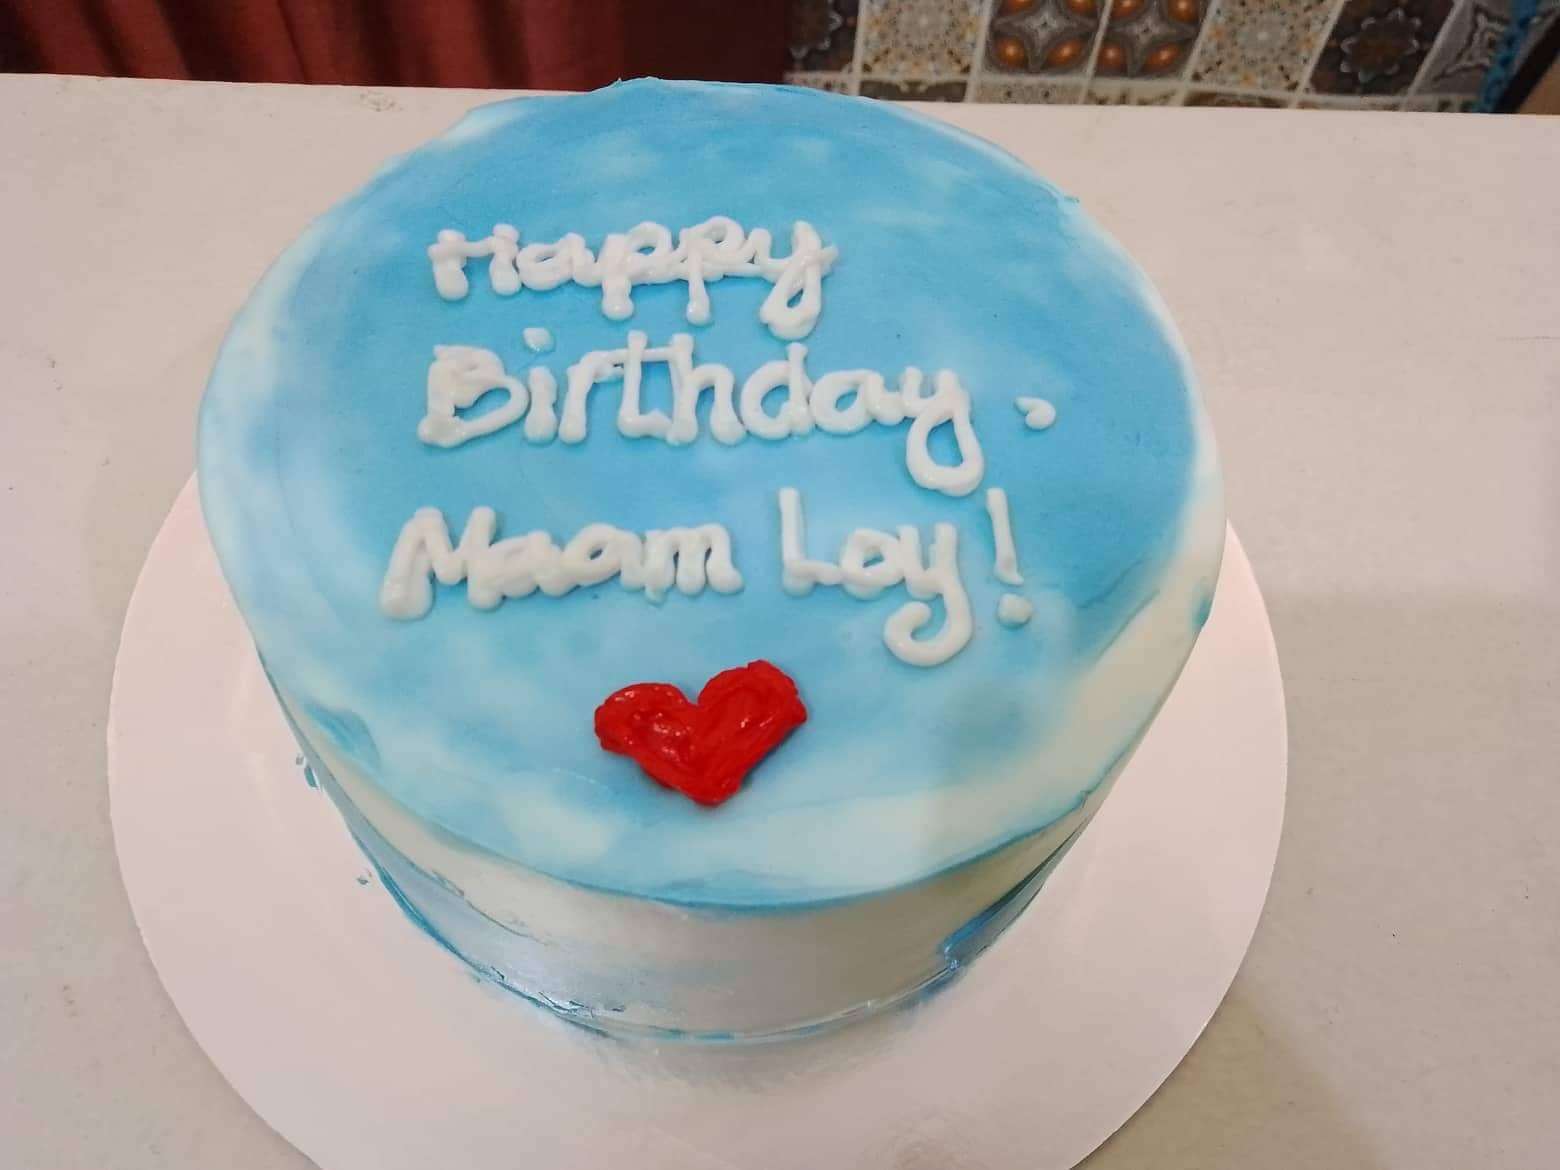 Share more than 77 happy birthday cake ma super hot - awesomeenglish.edu.vn